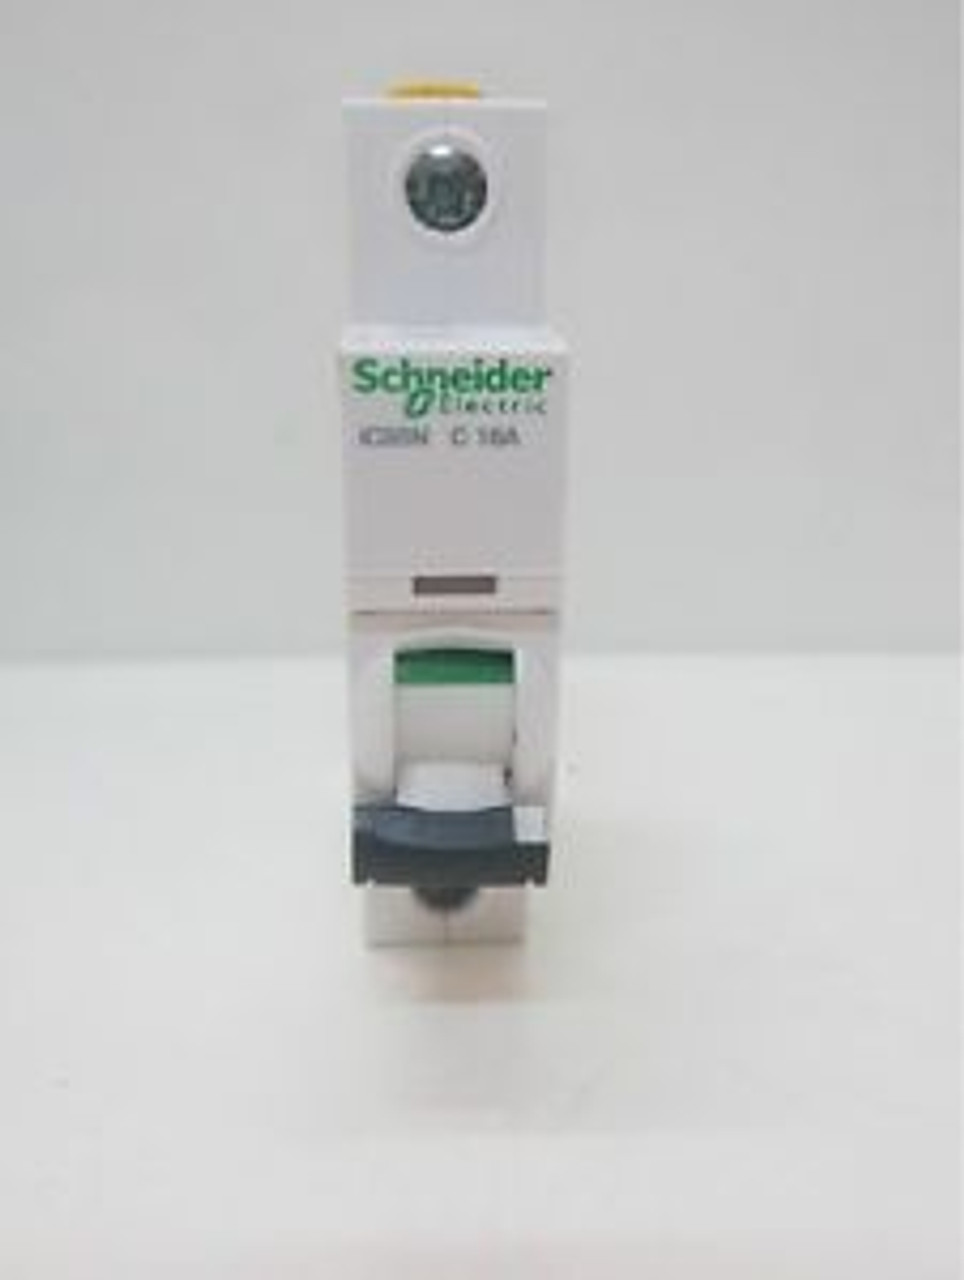 Schneider NEW IC65N 1P C16A Breaker 